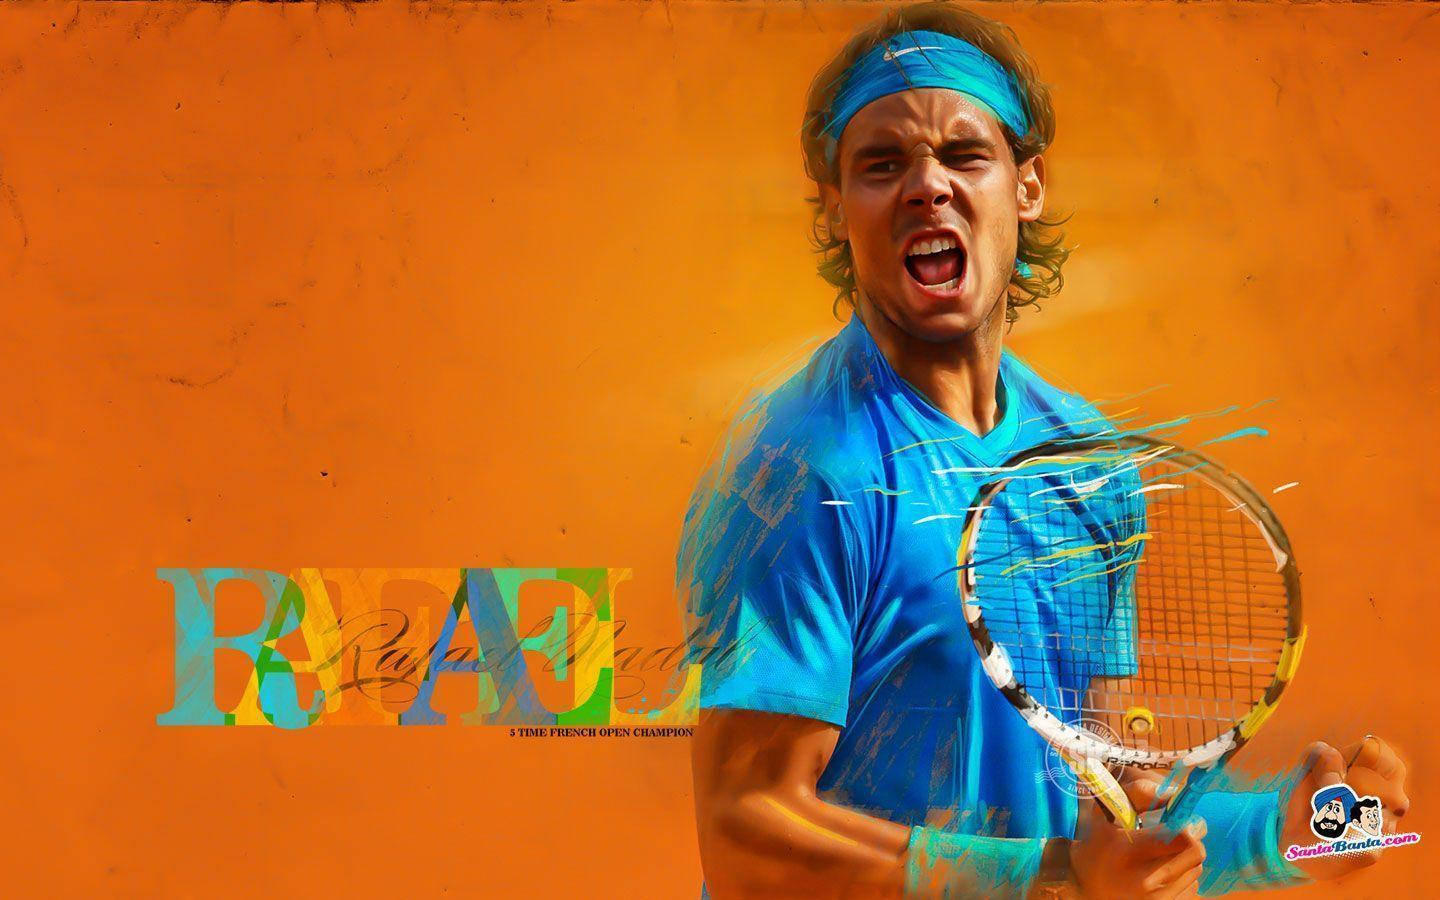 French Open Rafael Nadal Digital Art Background